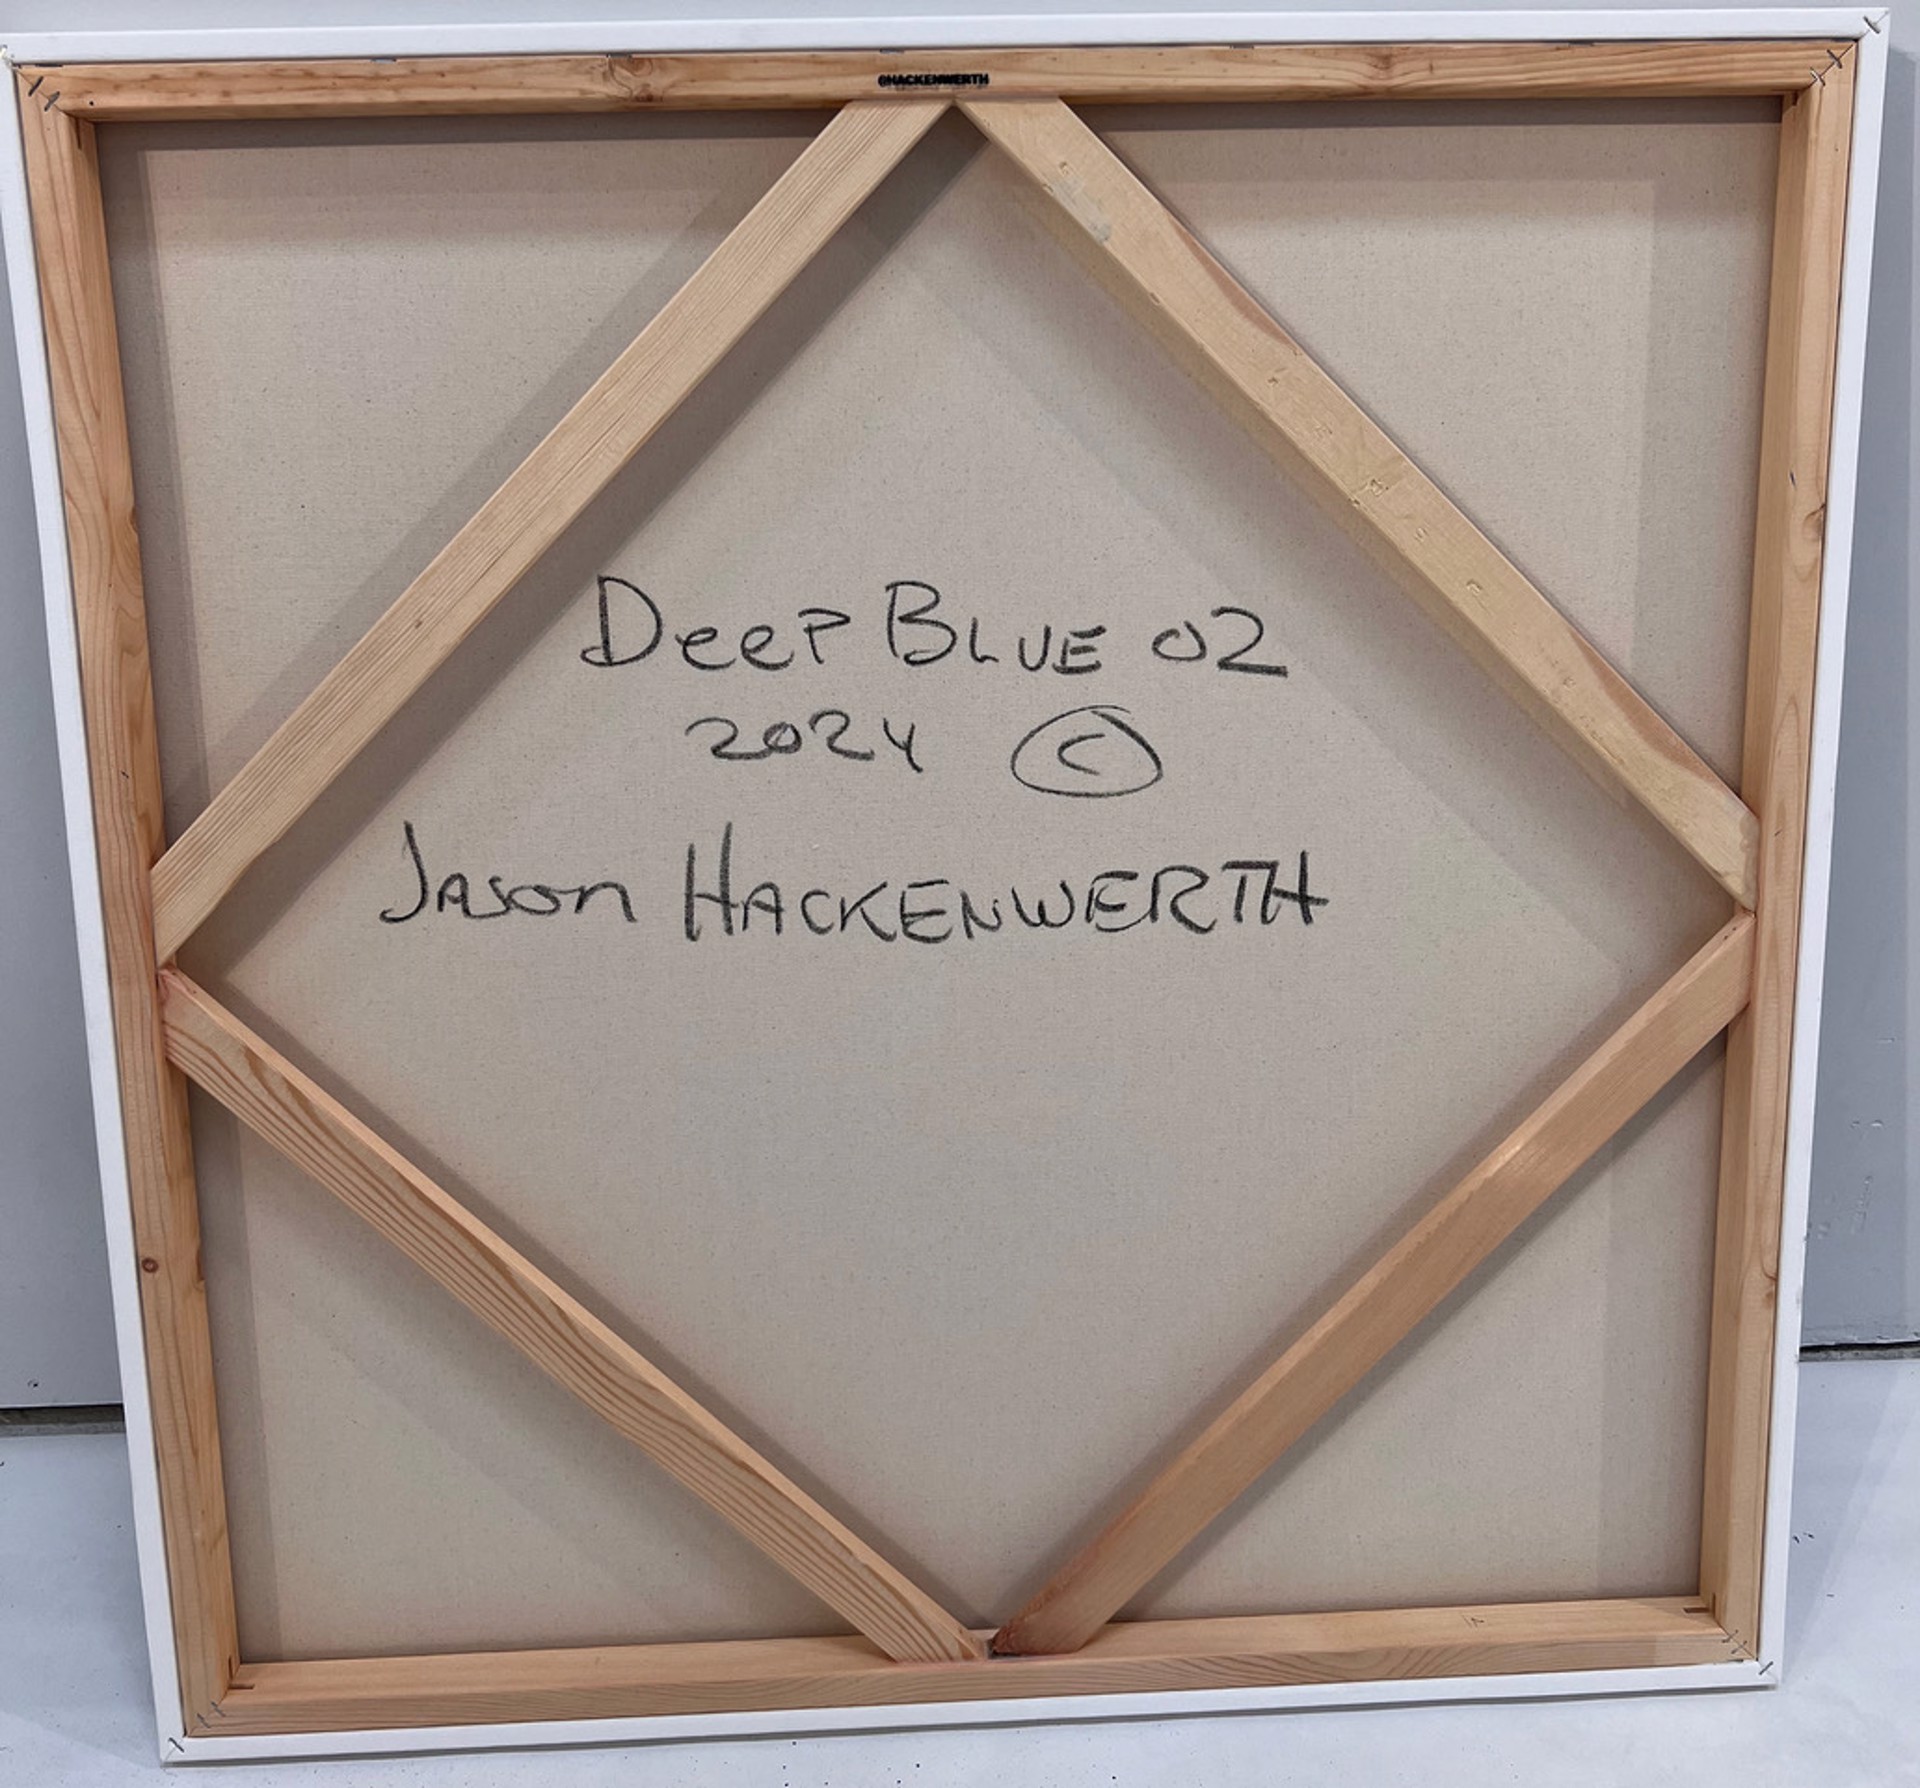 Deep Blue II by Jason Hackenwerth